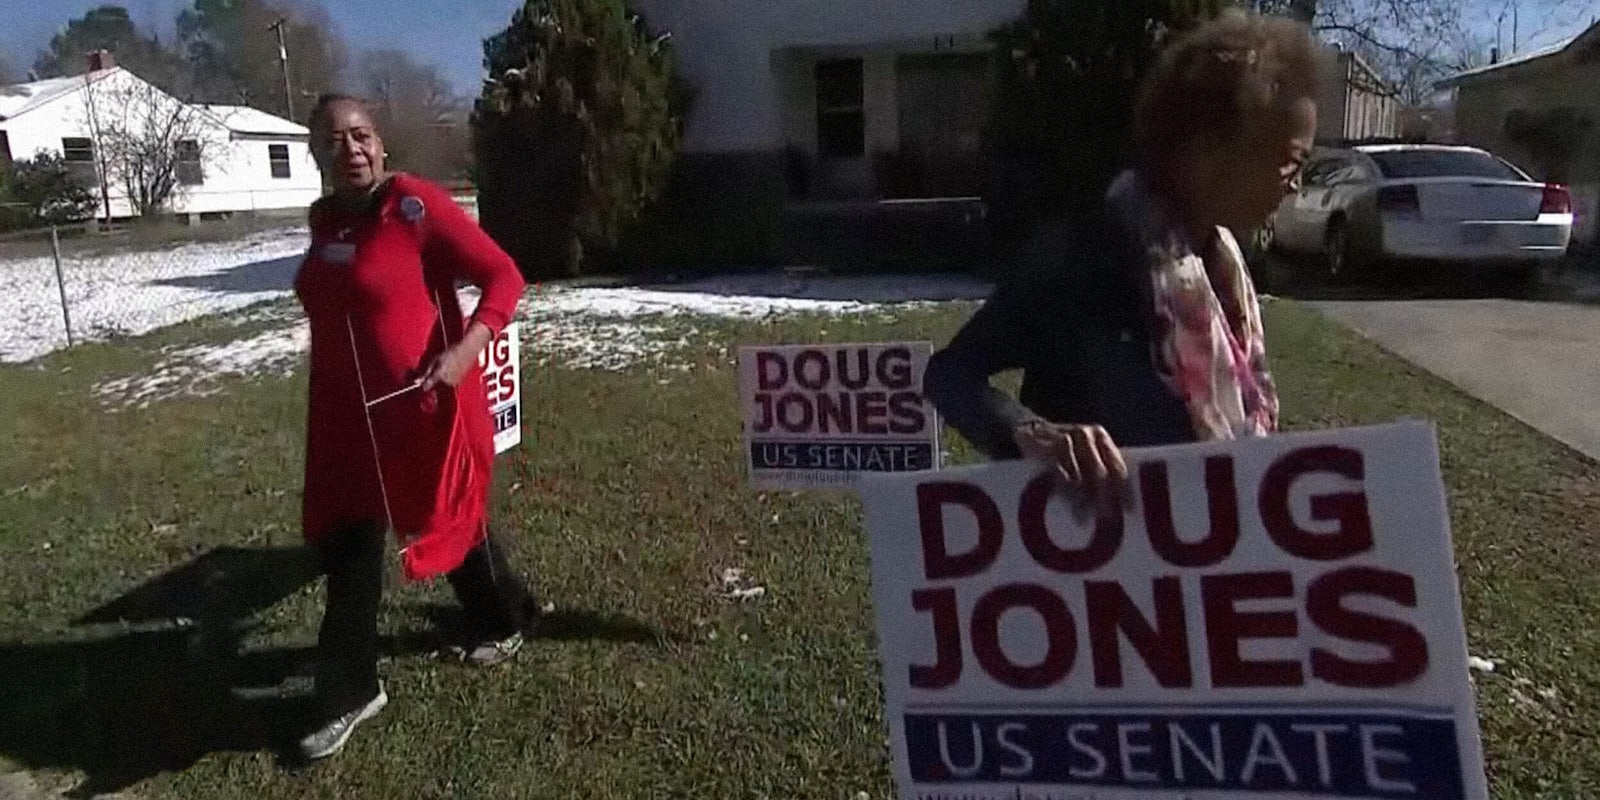 Black women campaigning for Doug Jones